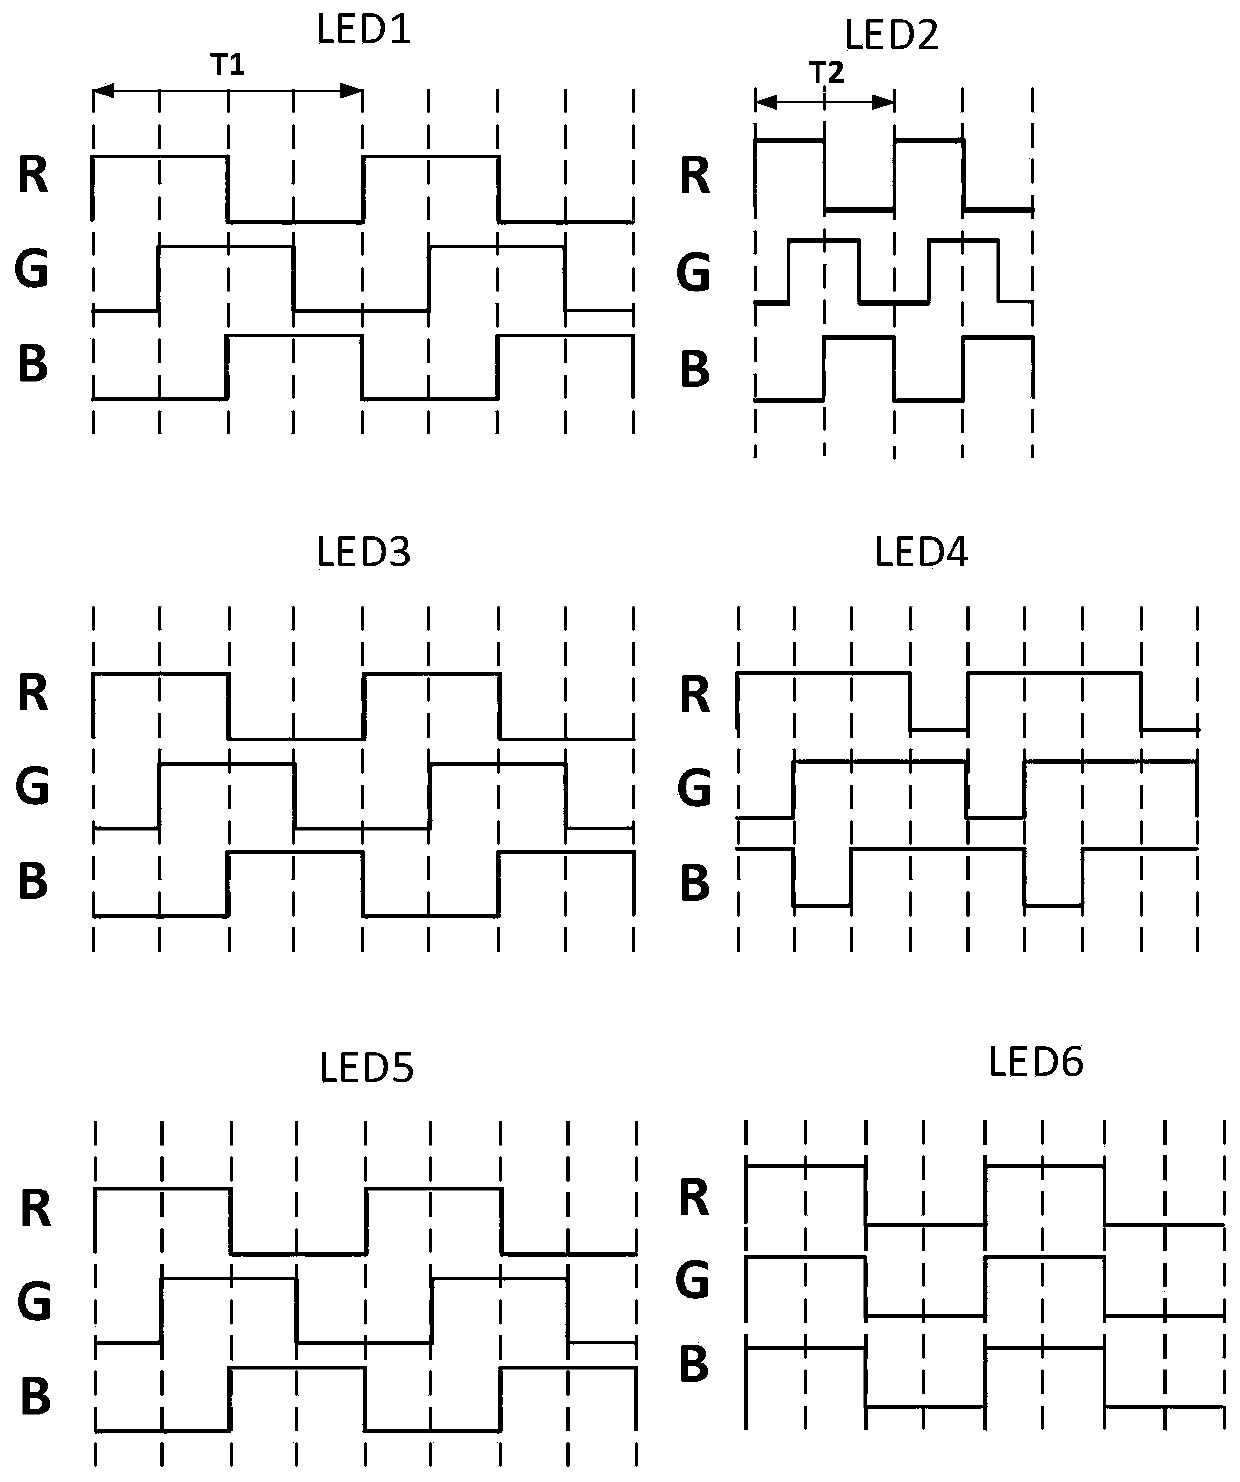 Visible light stripe code modulation and identification method based on RGB LED lamp